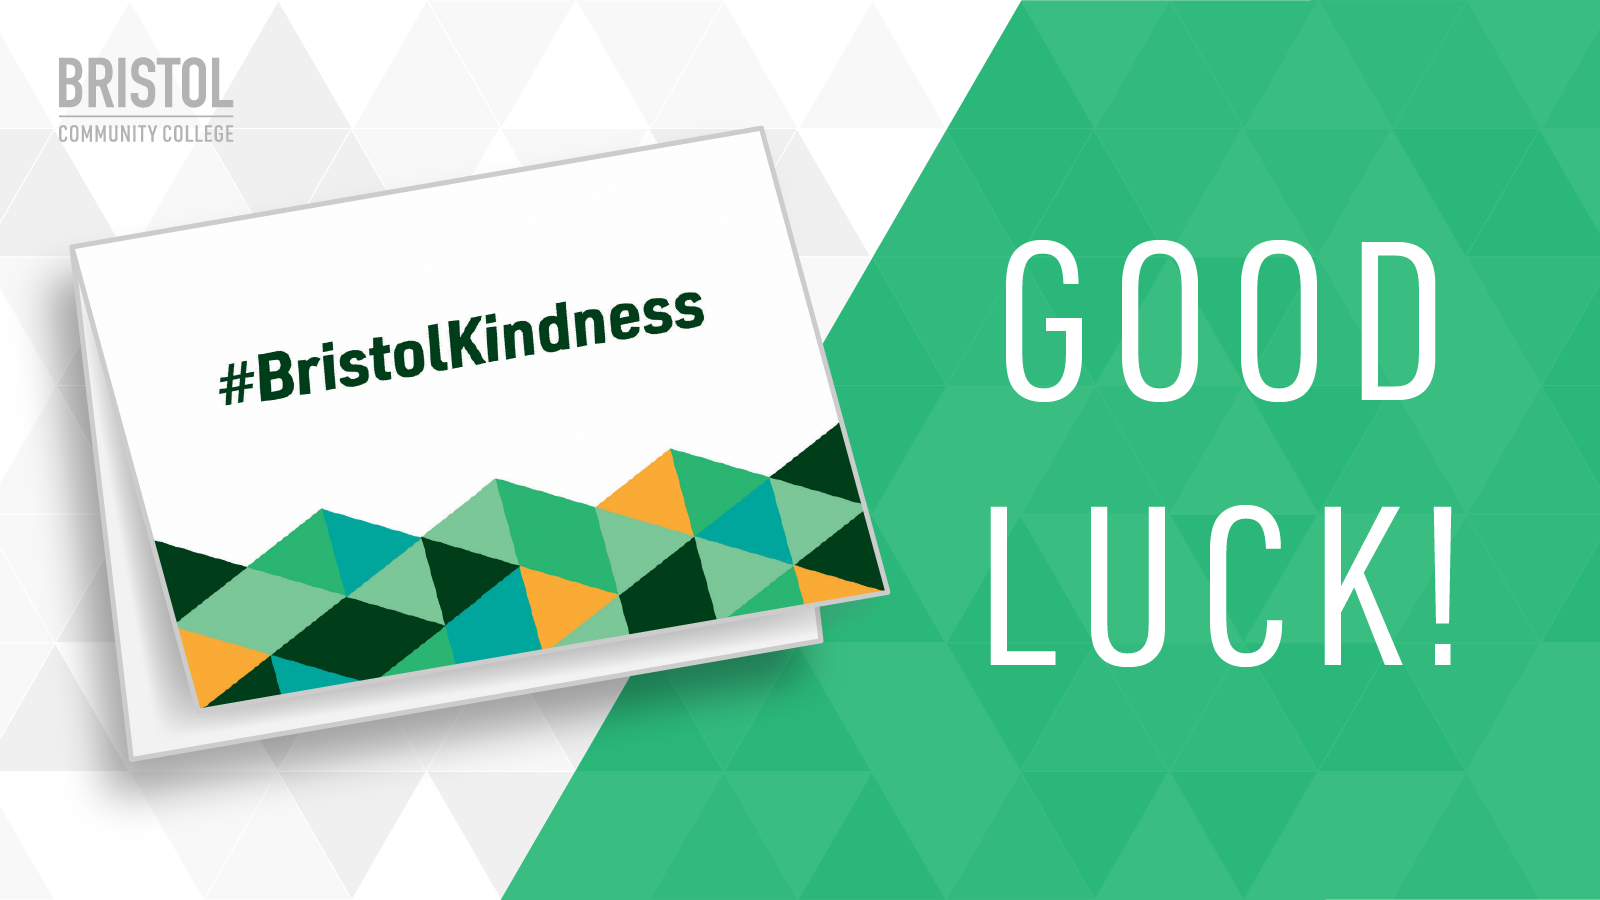 Bristol Kindness - Good Luck